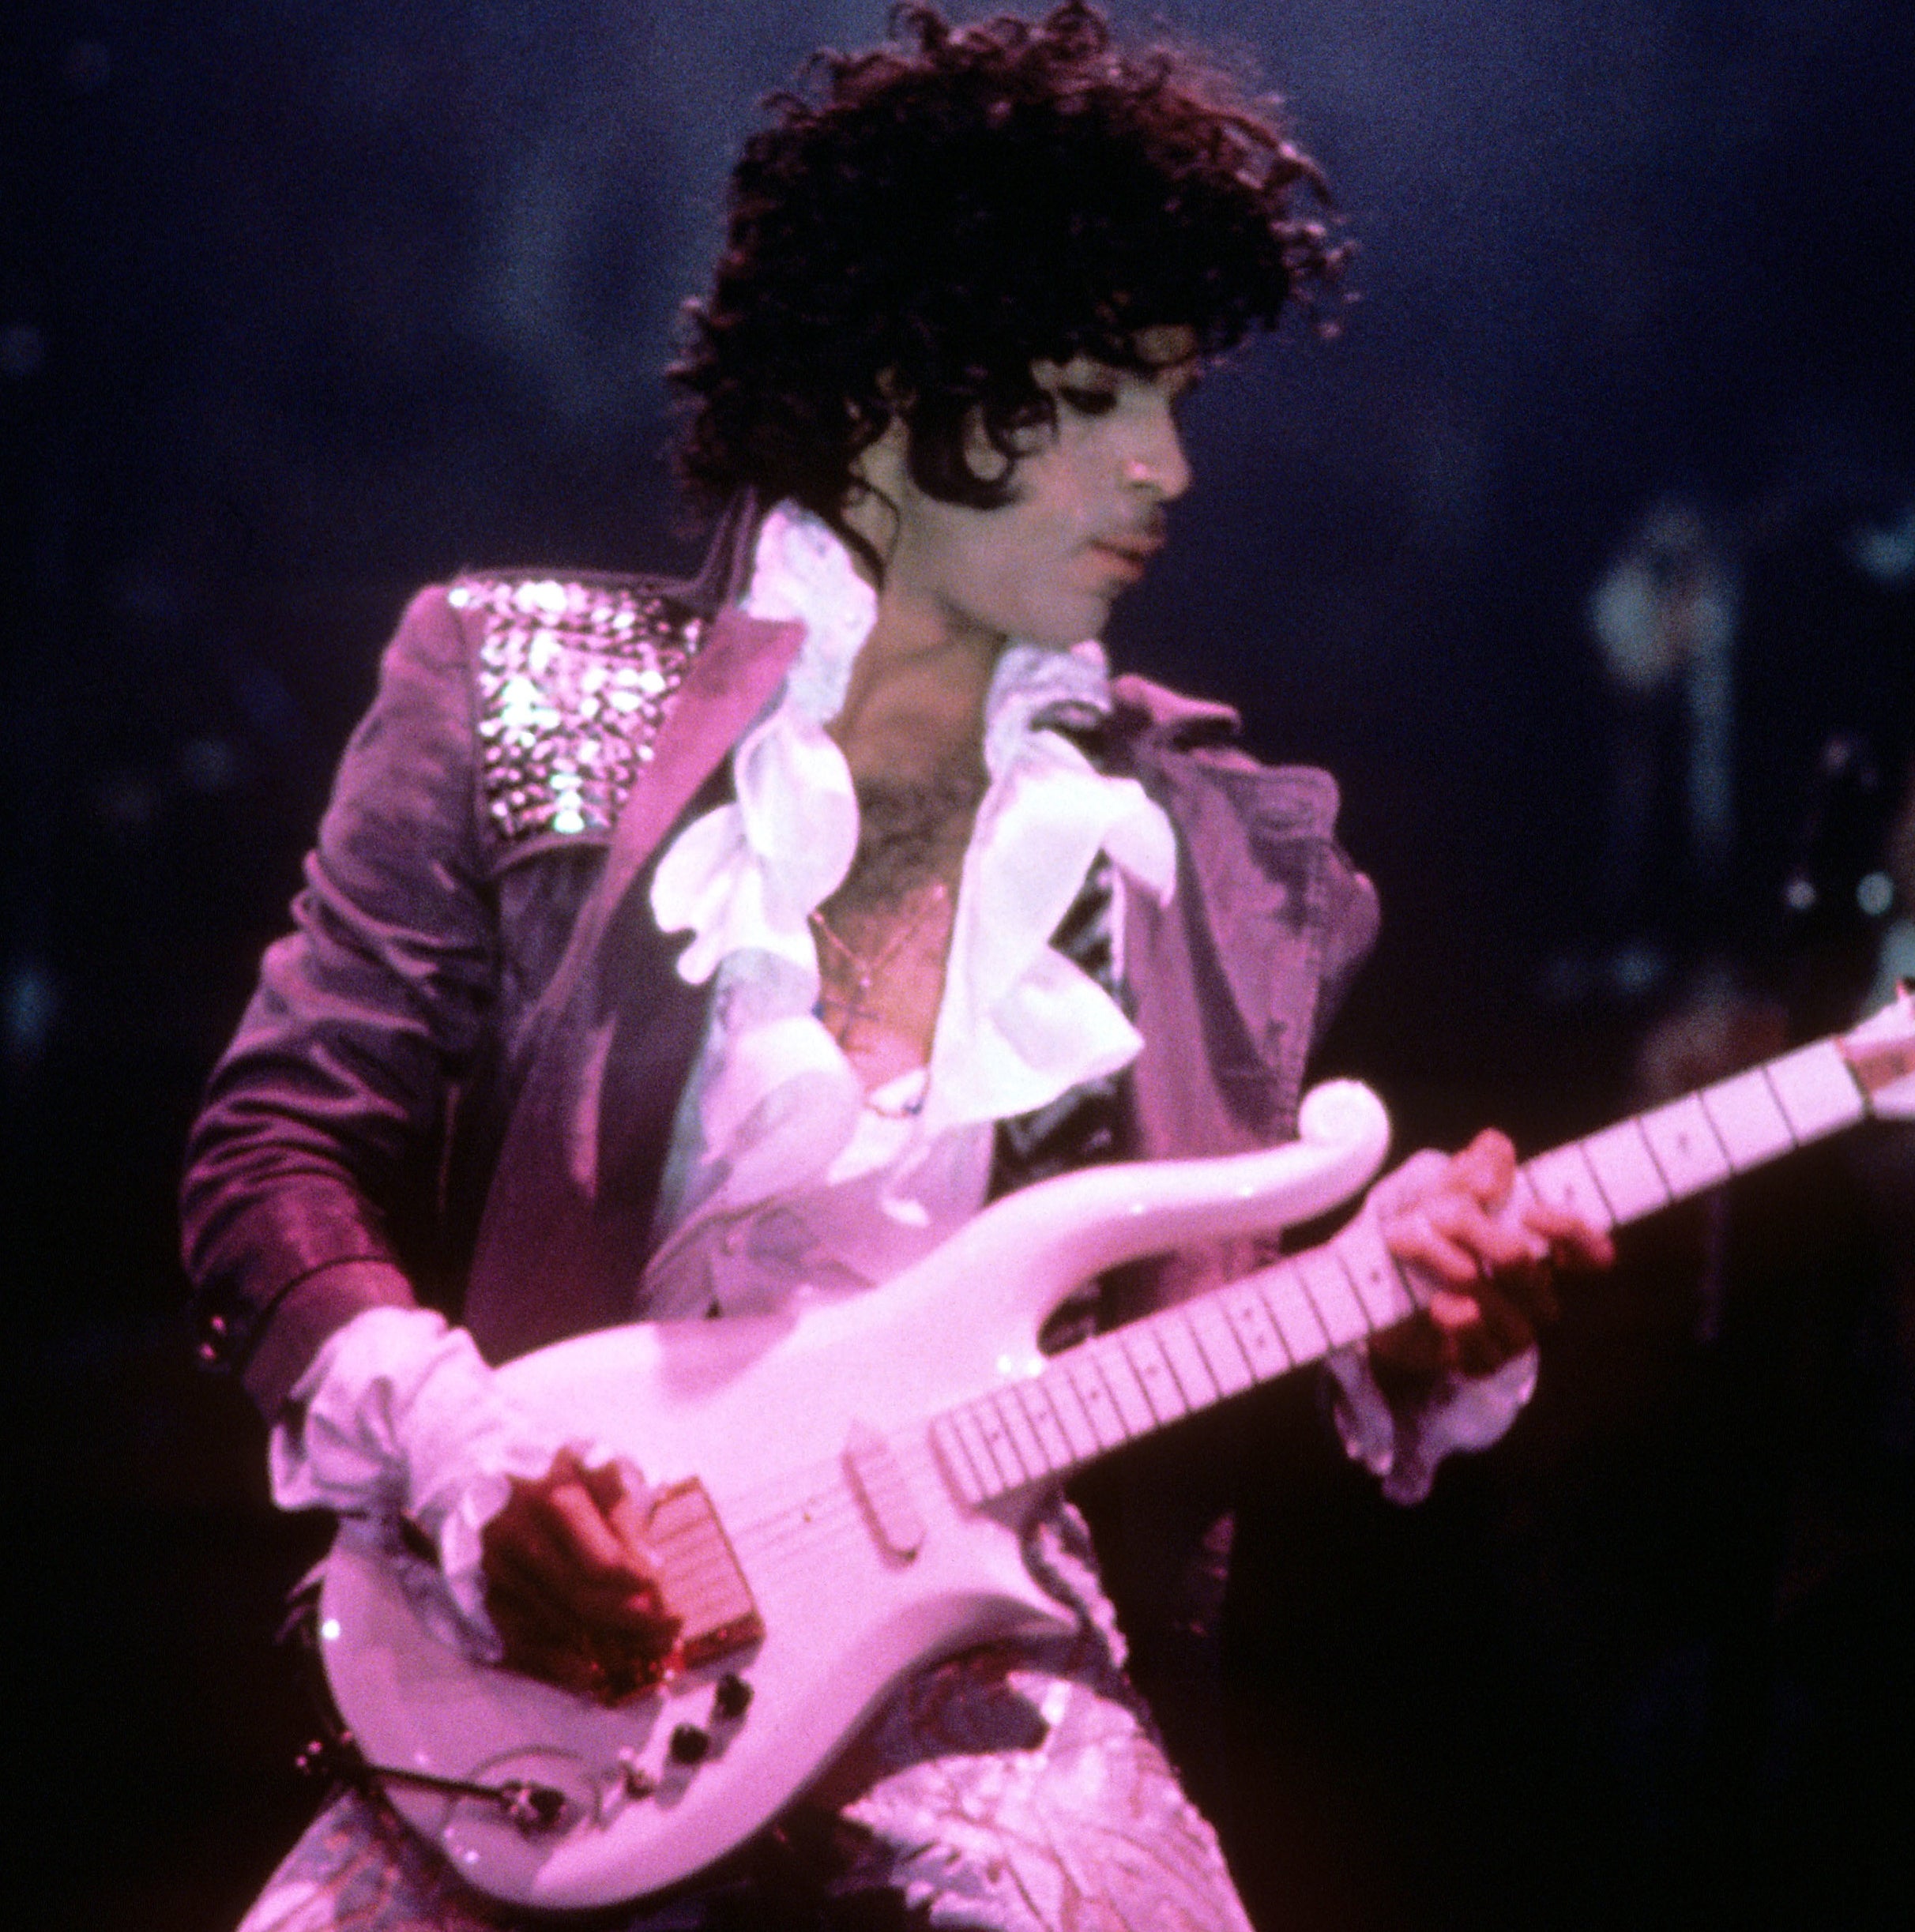 Prince during a purple rain performance